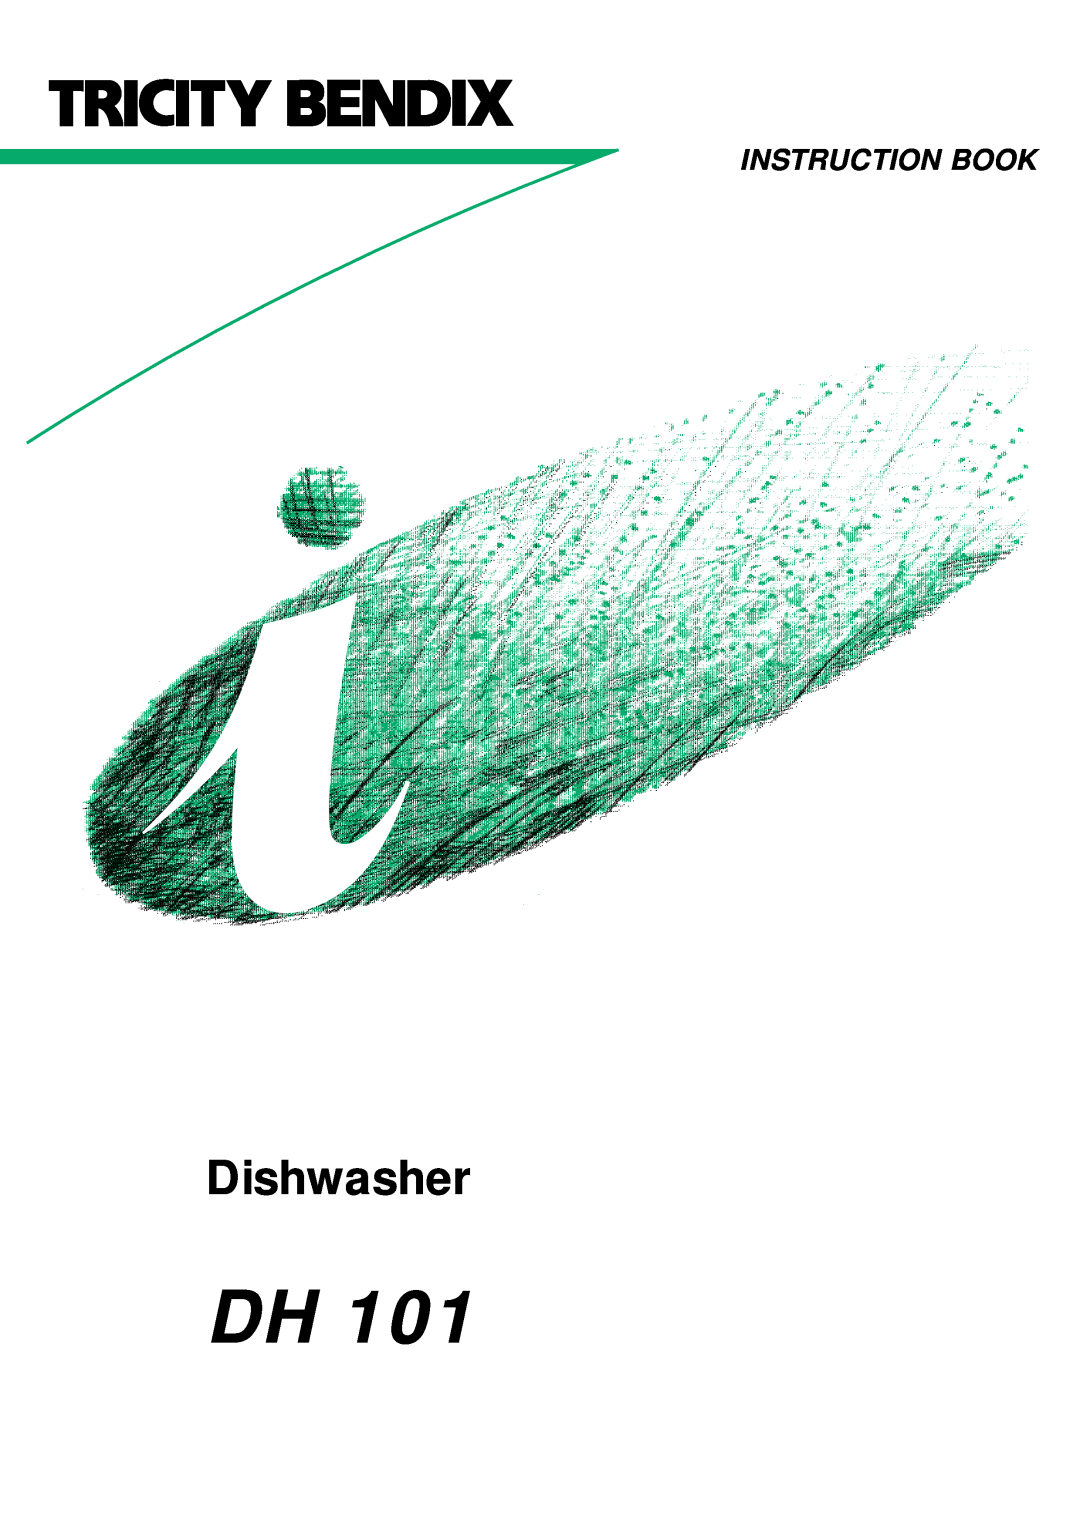 Tricity Bendix DH 101 manual Dishwasher, Instruction Book 